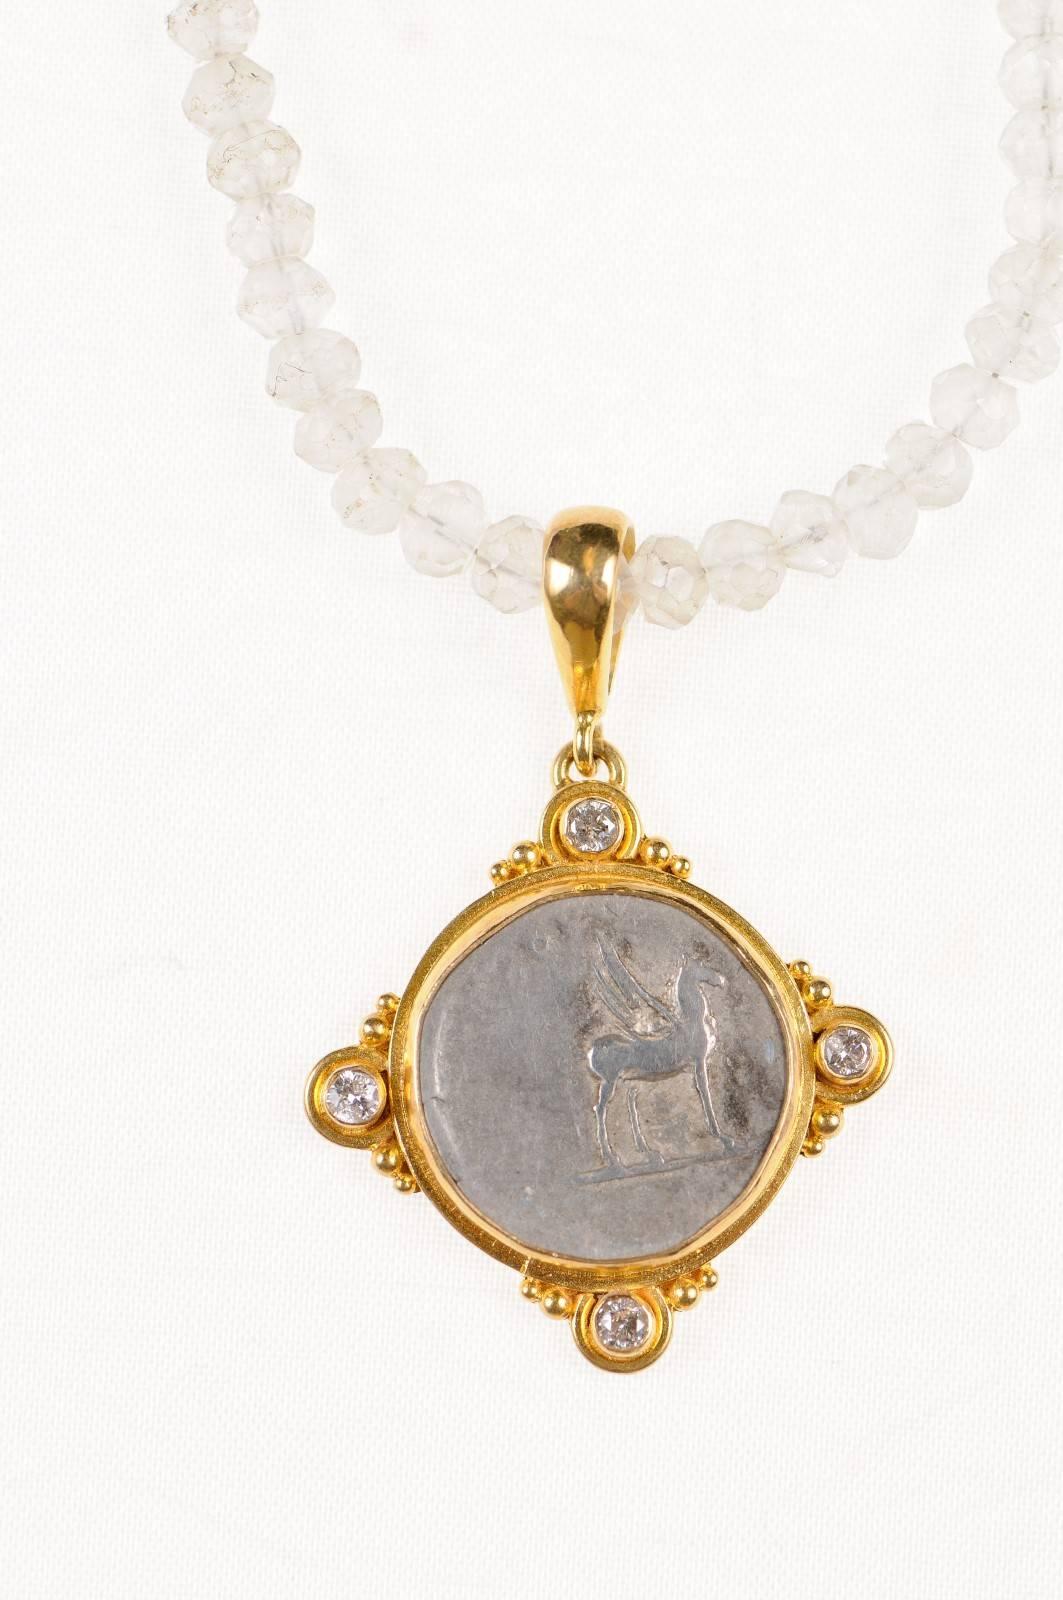 Classical Roman Roman Empire Domitian Coin circa 81-96 AD Set in Gold with Diamond Accents For Sale